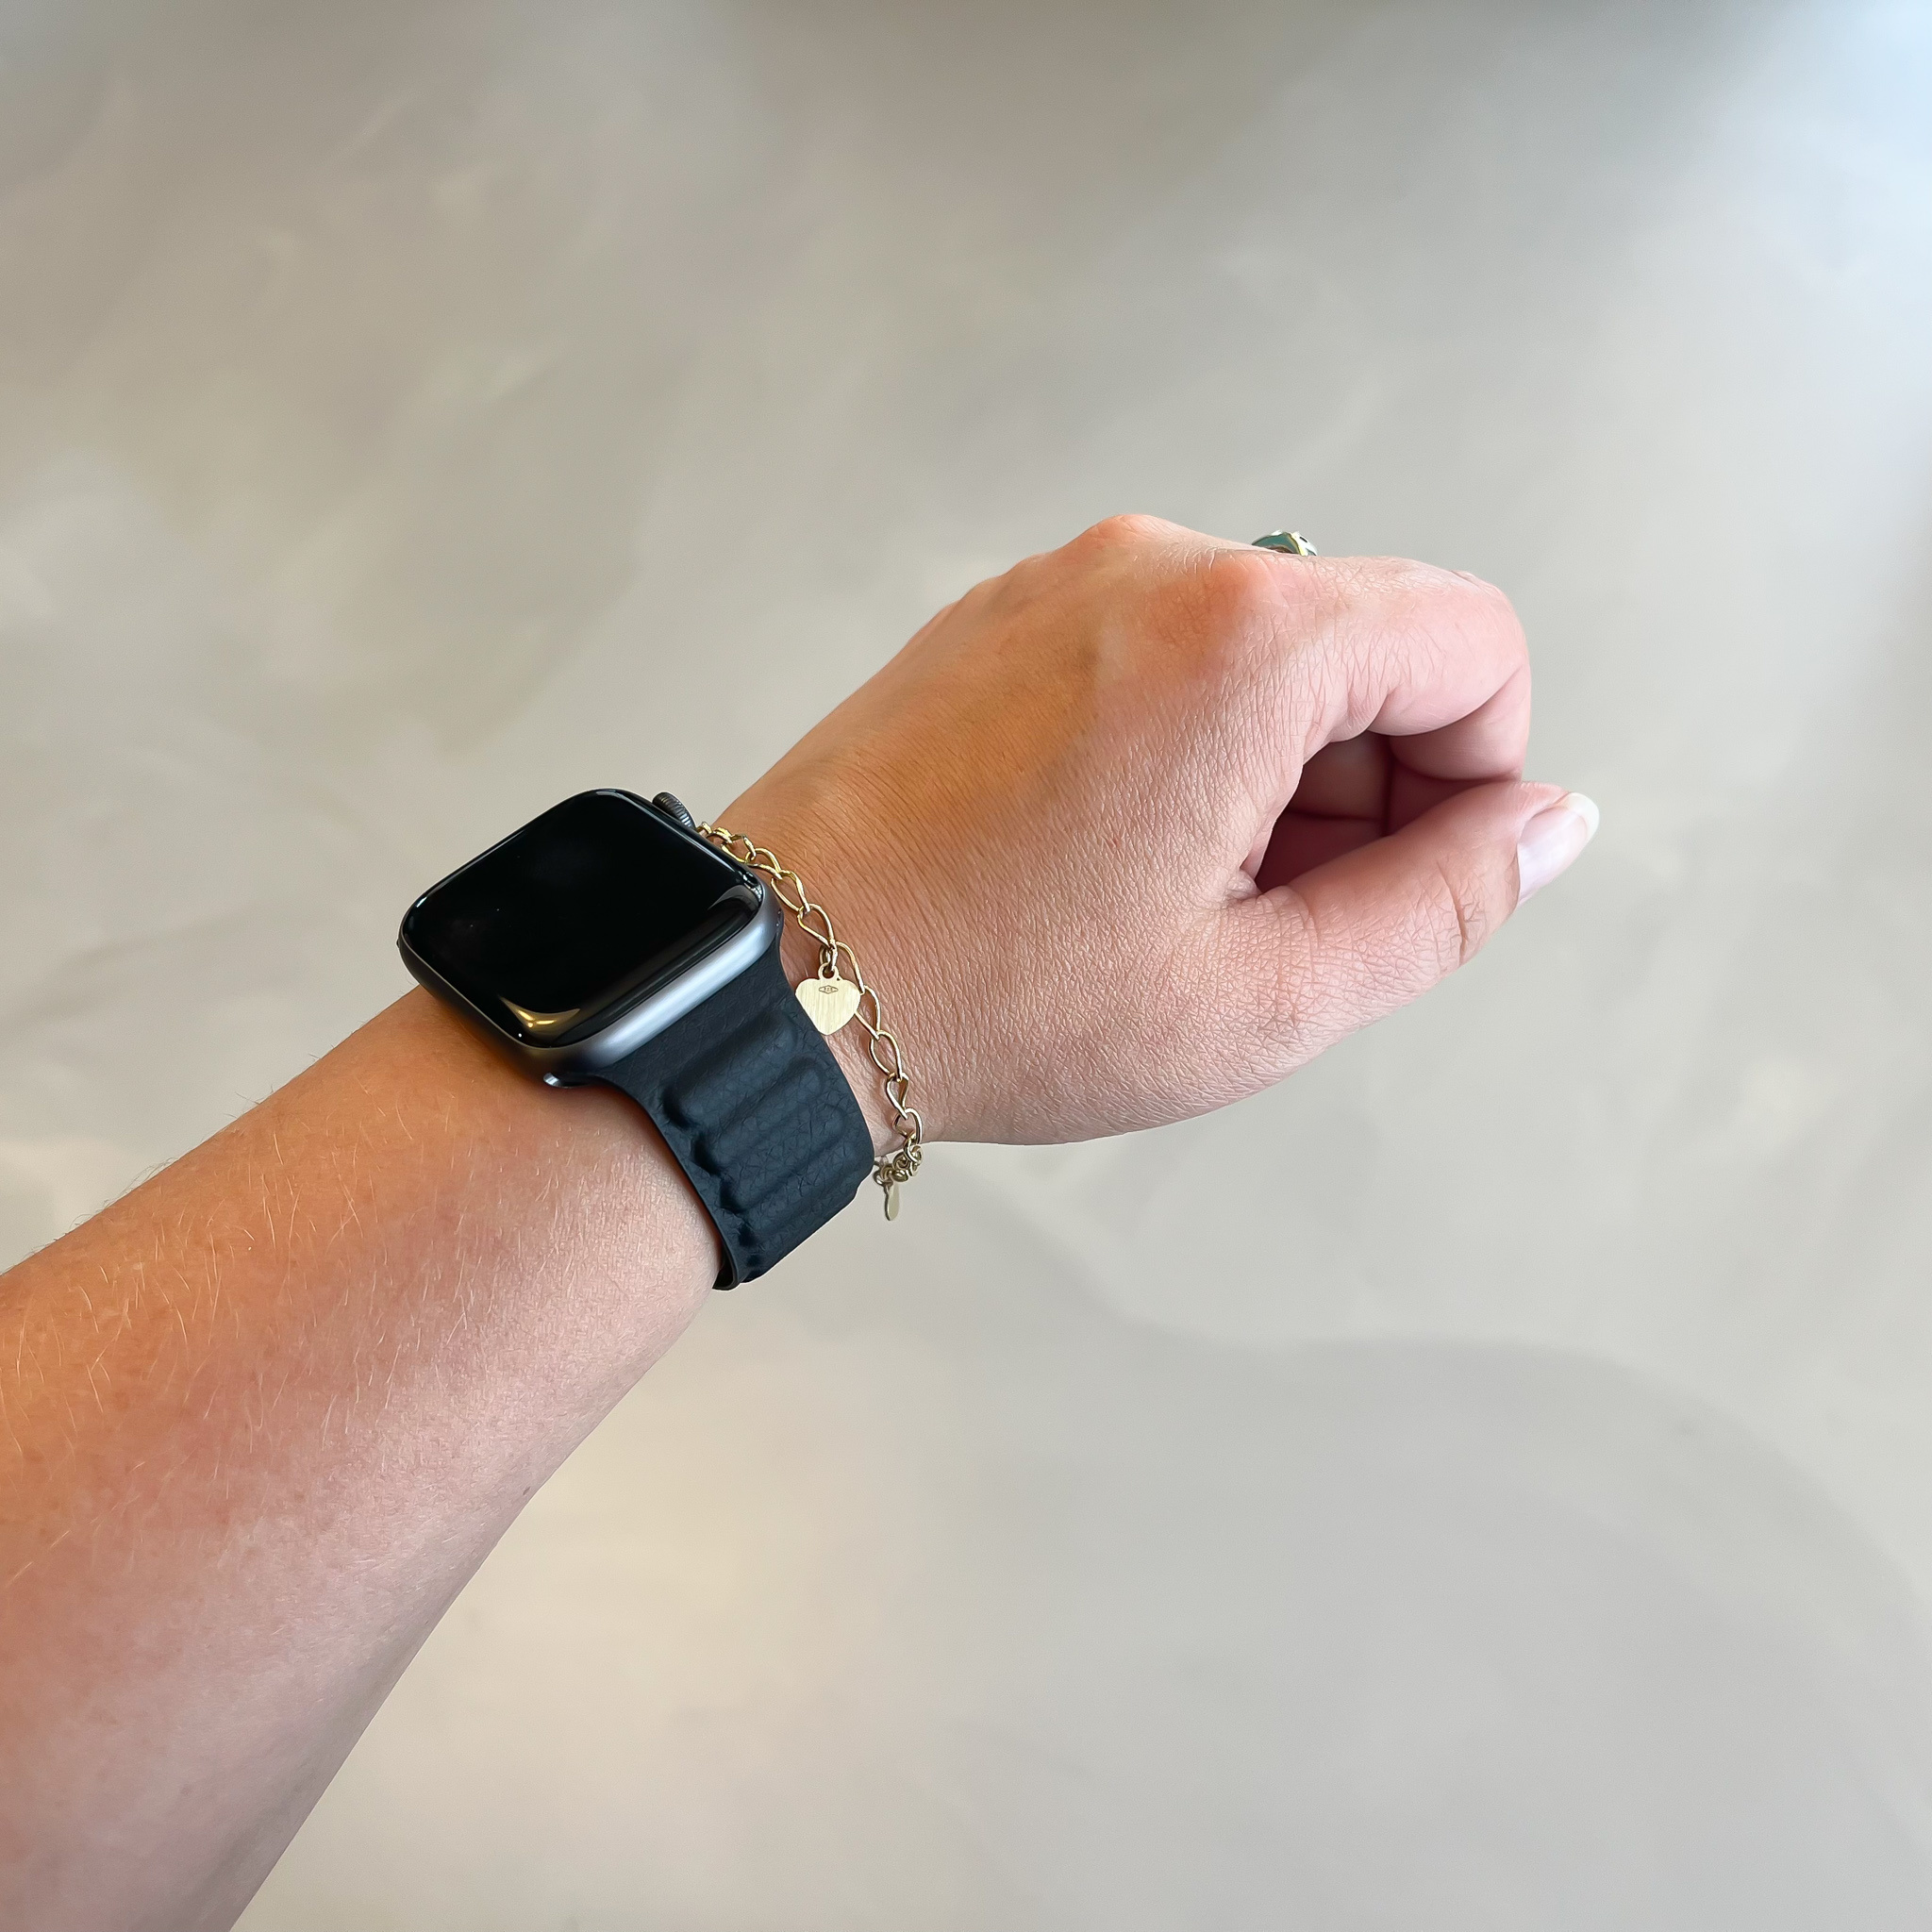 Cinturino singolo in pelle per Apple Watch - nero